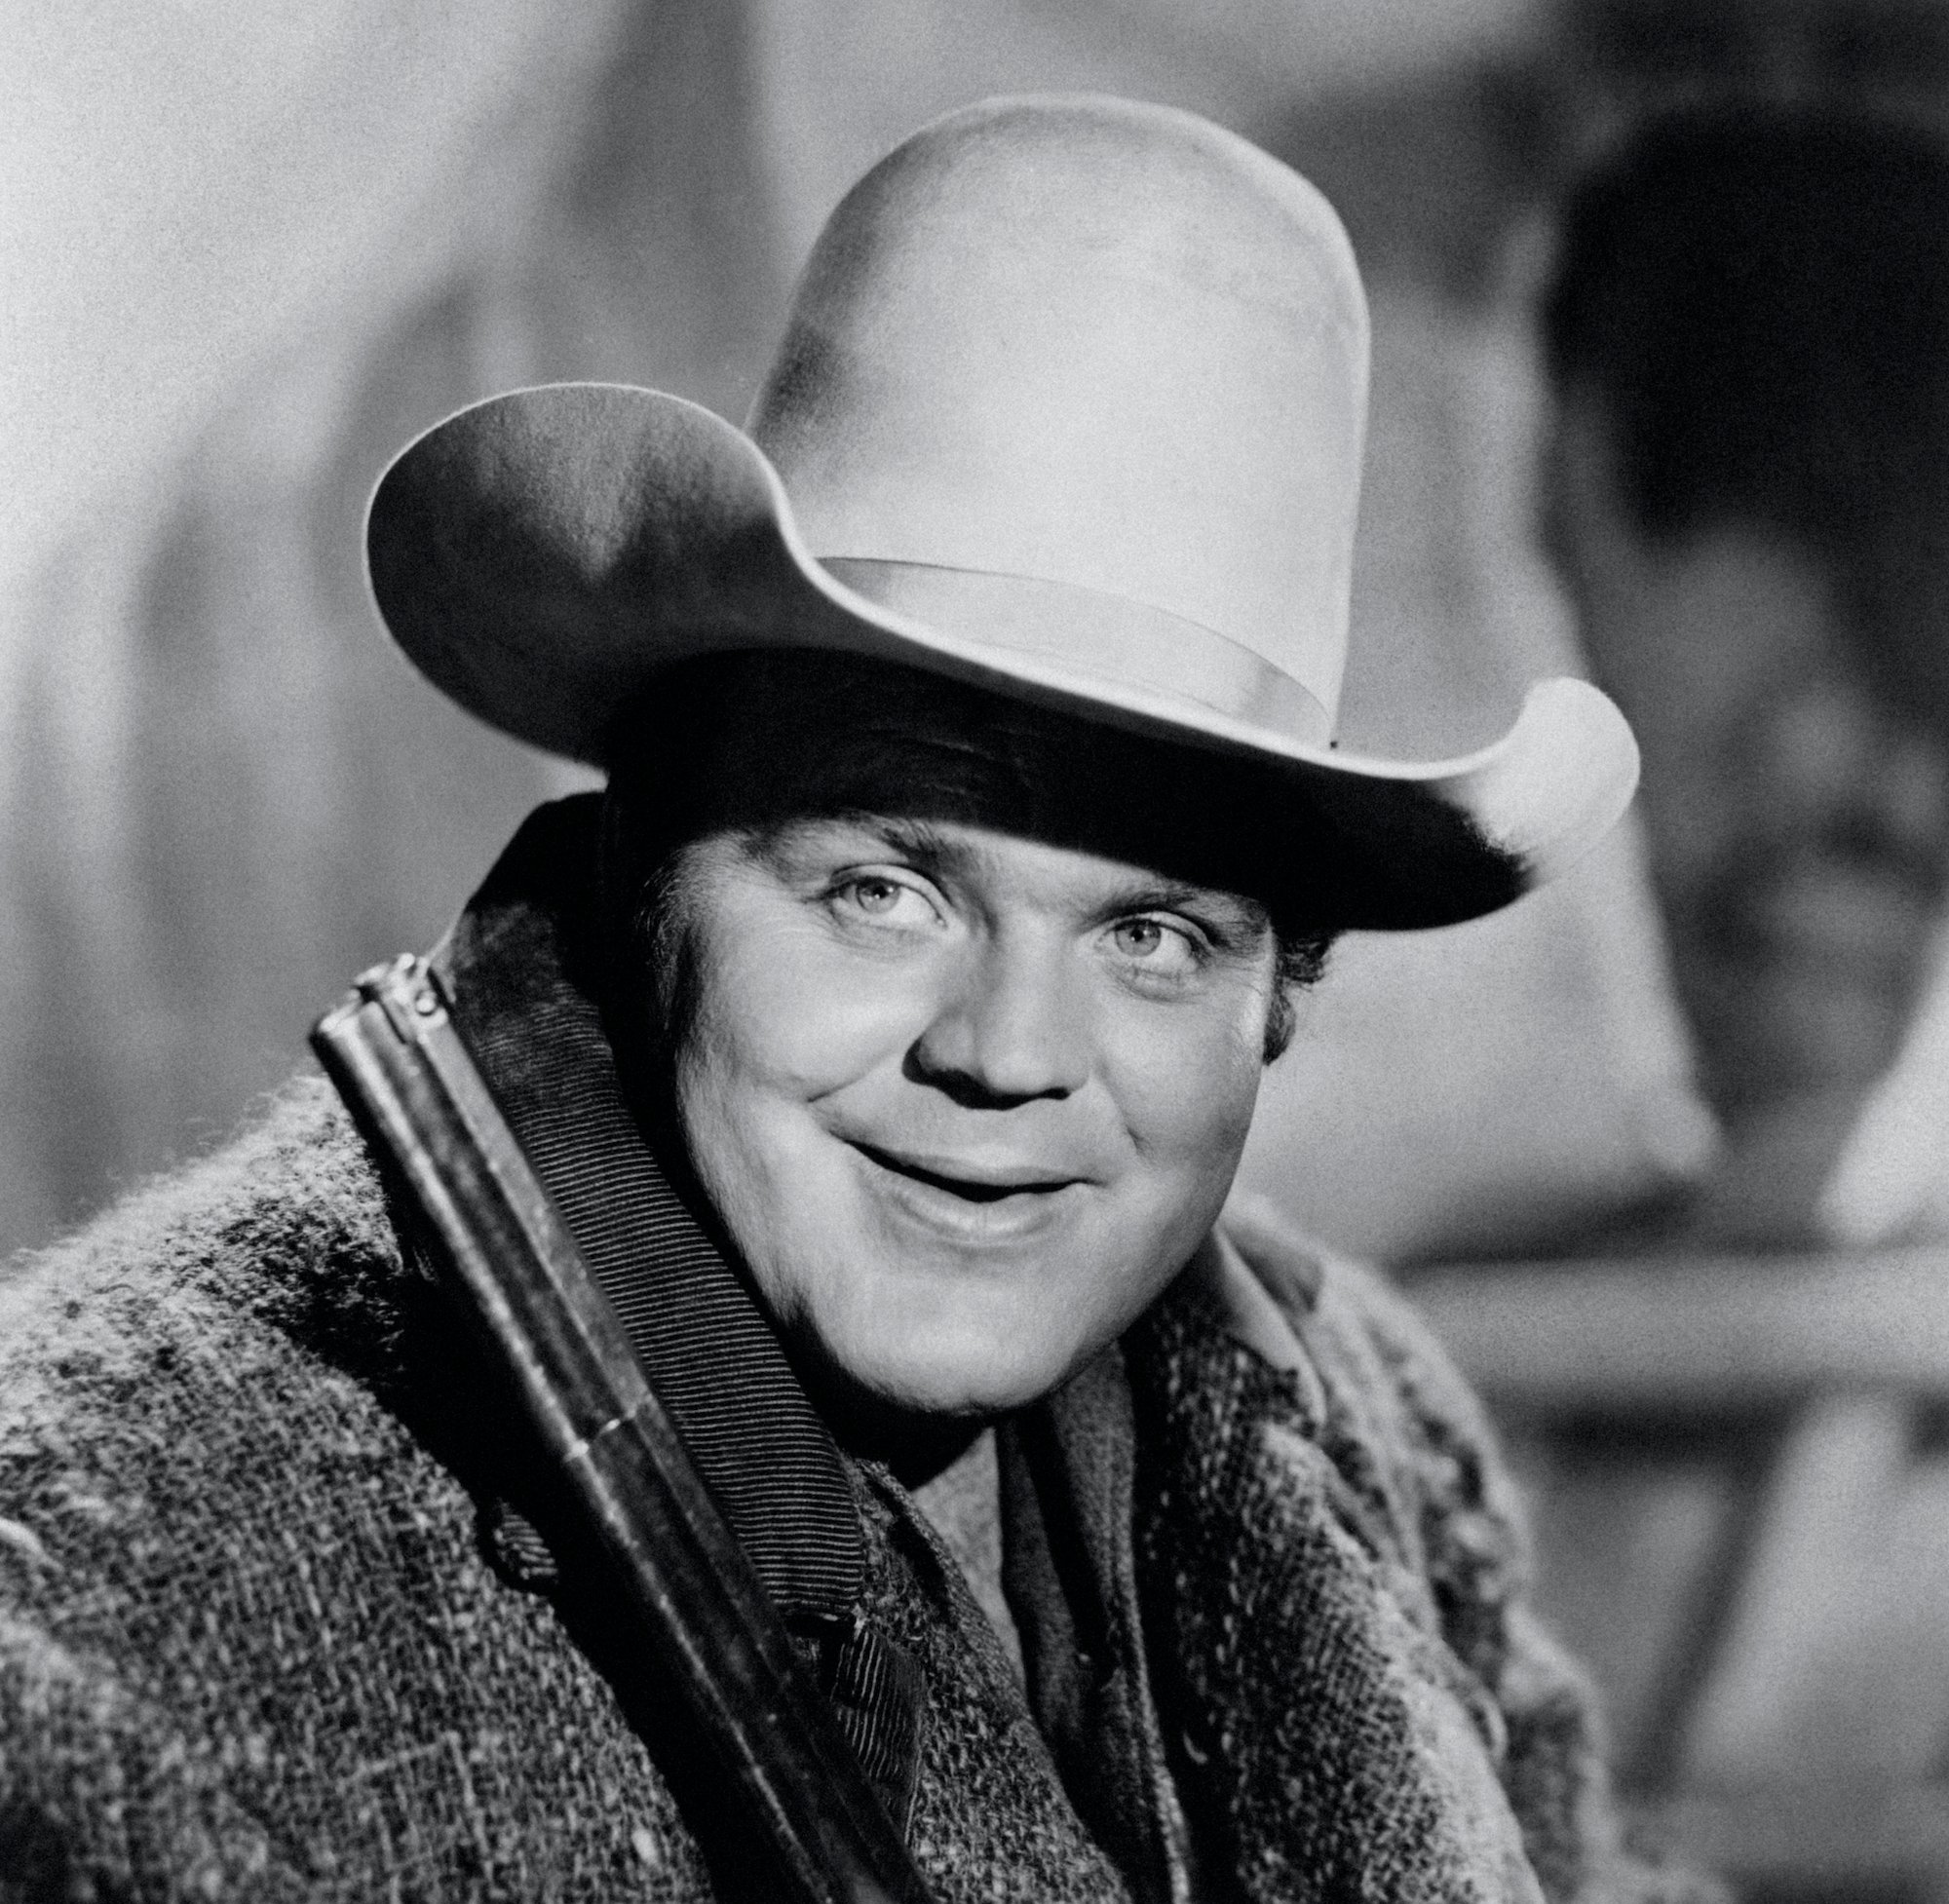 Dan Blocker wearing a cowboy hat, in black and white